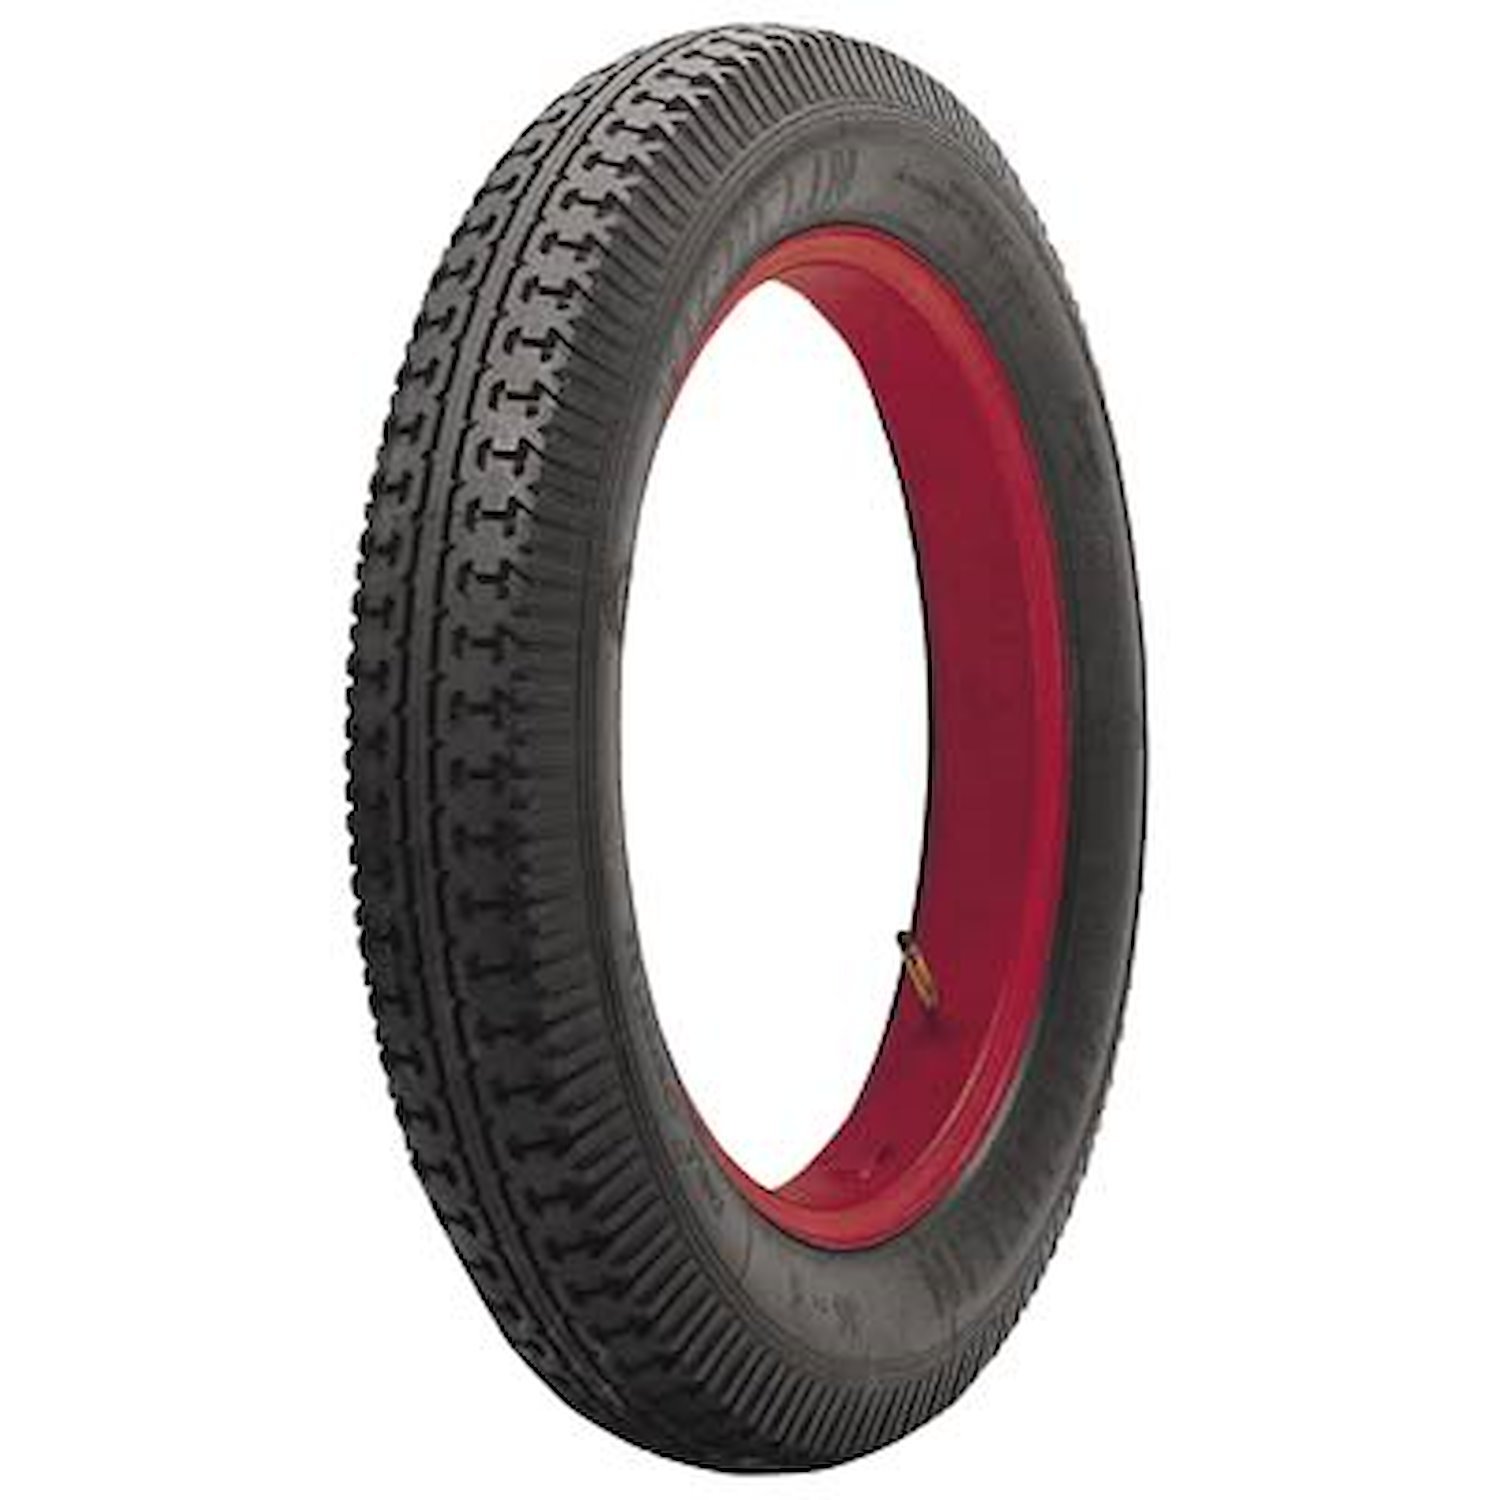 72500 Tire, Michelin Double Rivet, 600/650-18